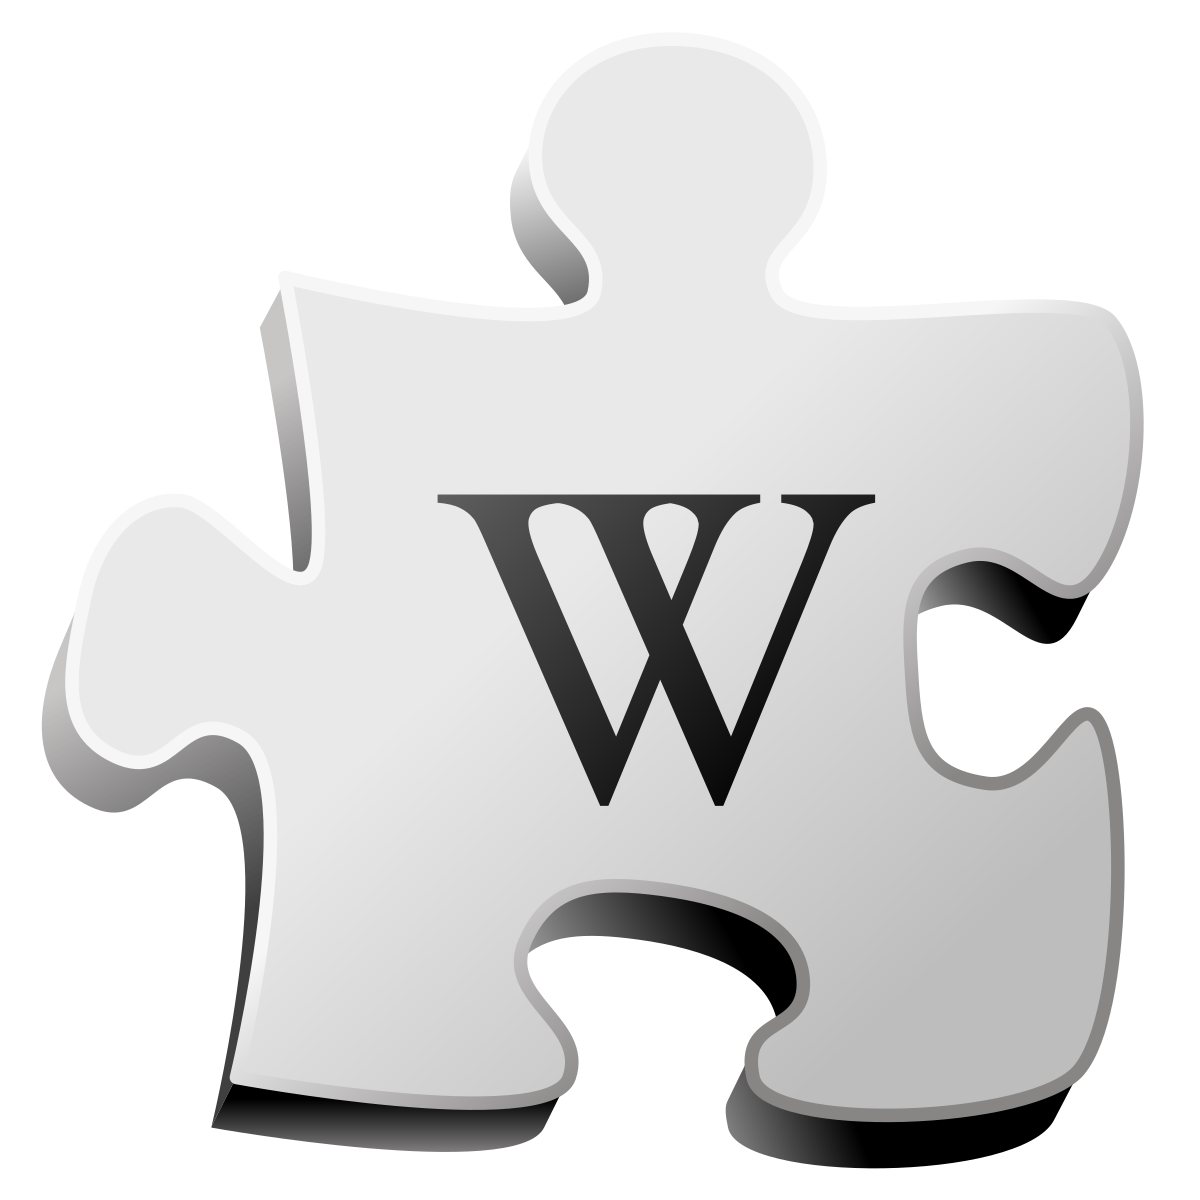 Https ru wiktionary org wiki. Иконка Wiki. Википедия логотип. Символ Википедии. Значок Википедии на прозрачном фоне.